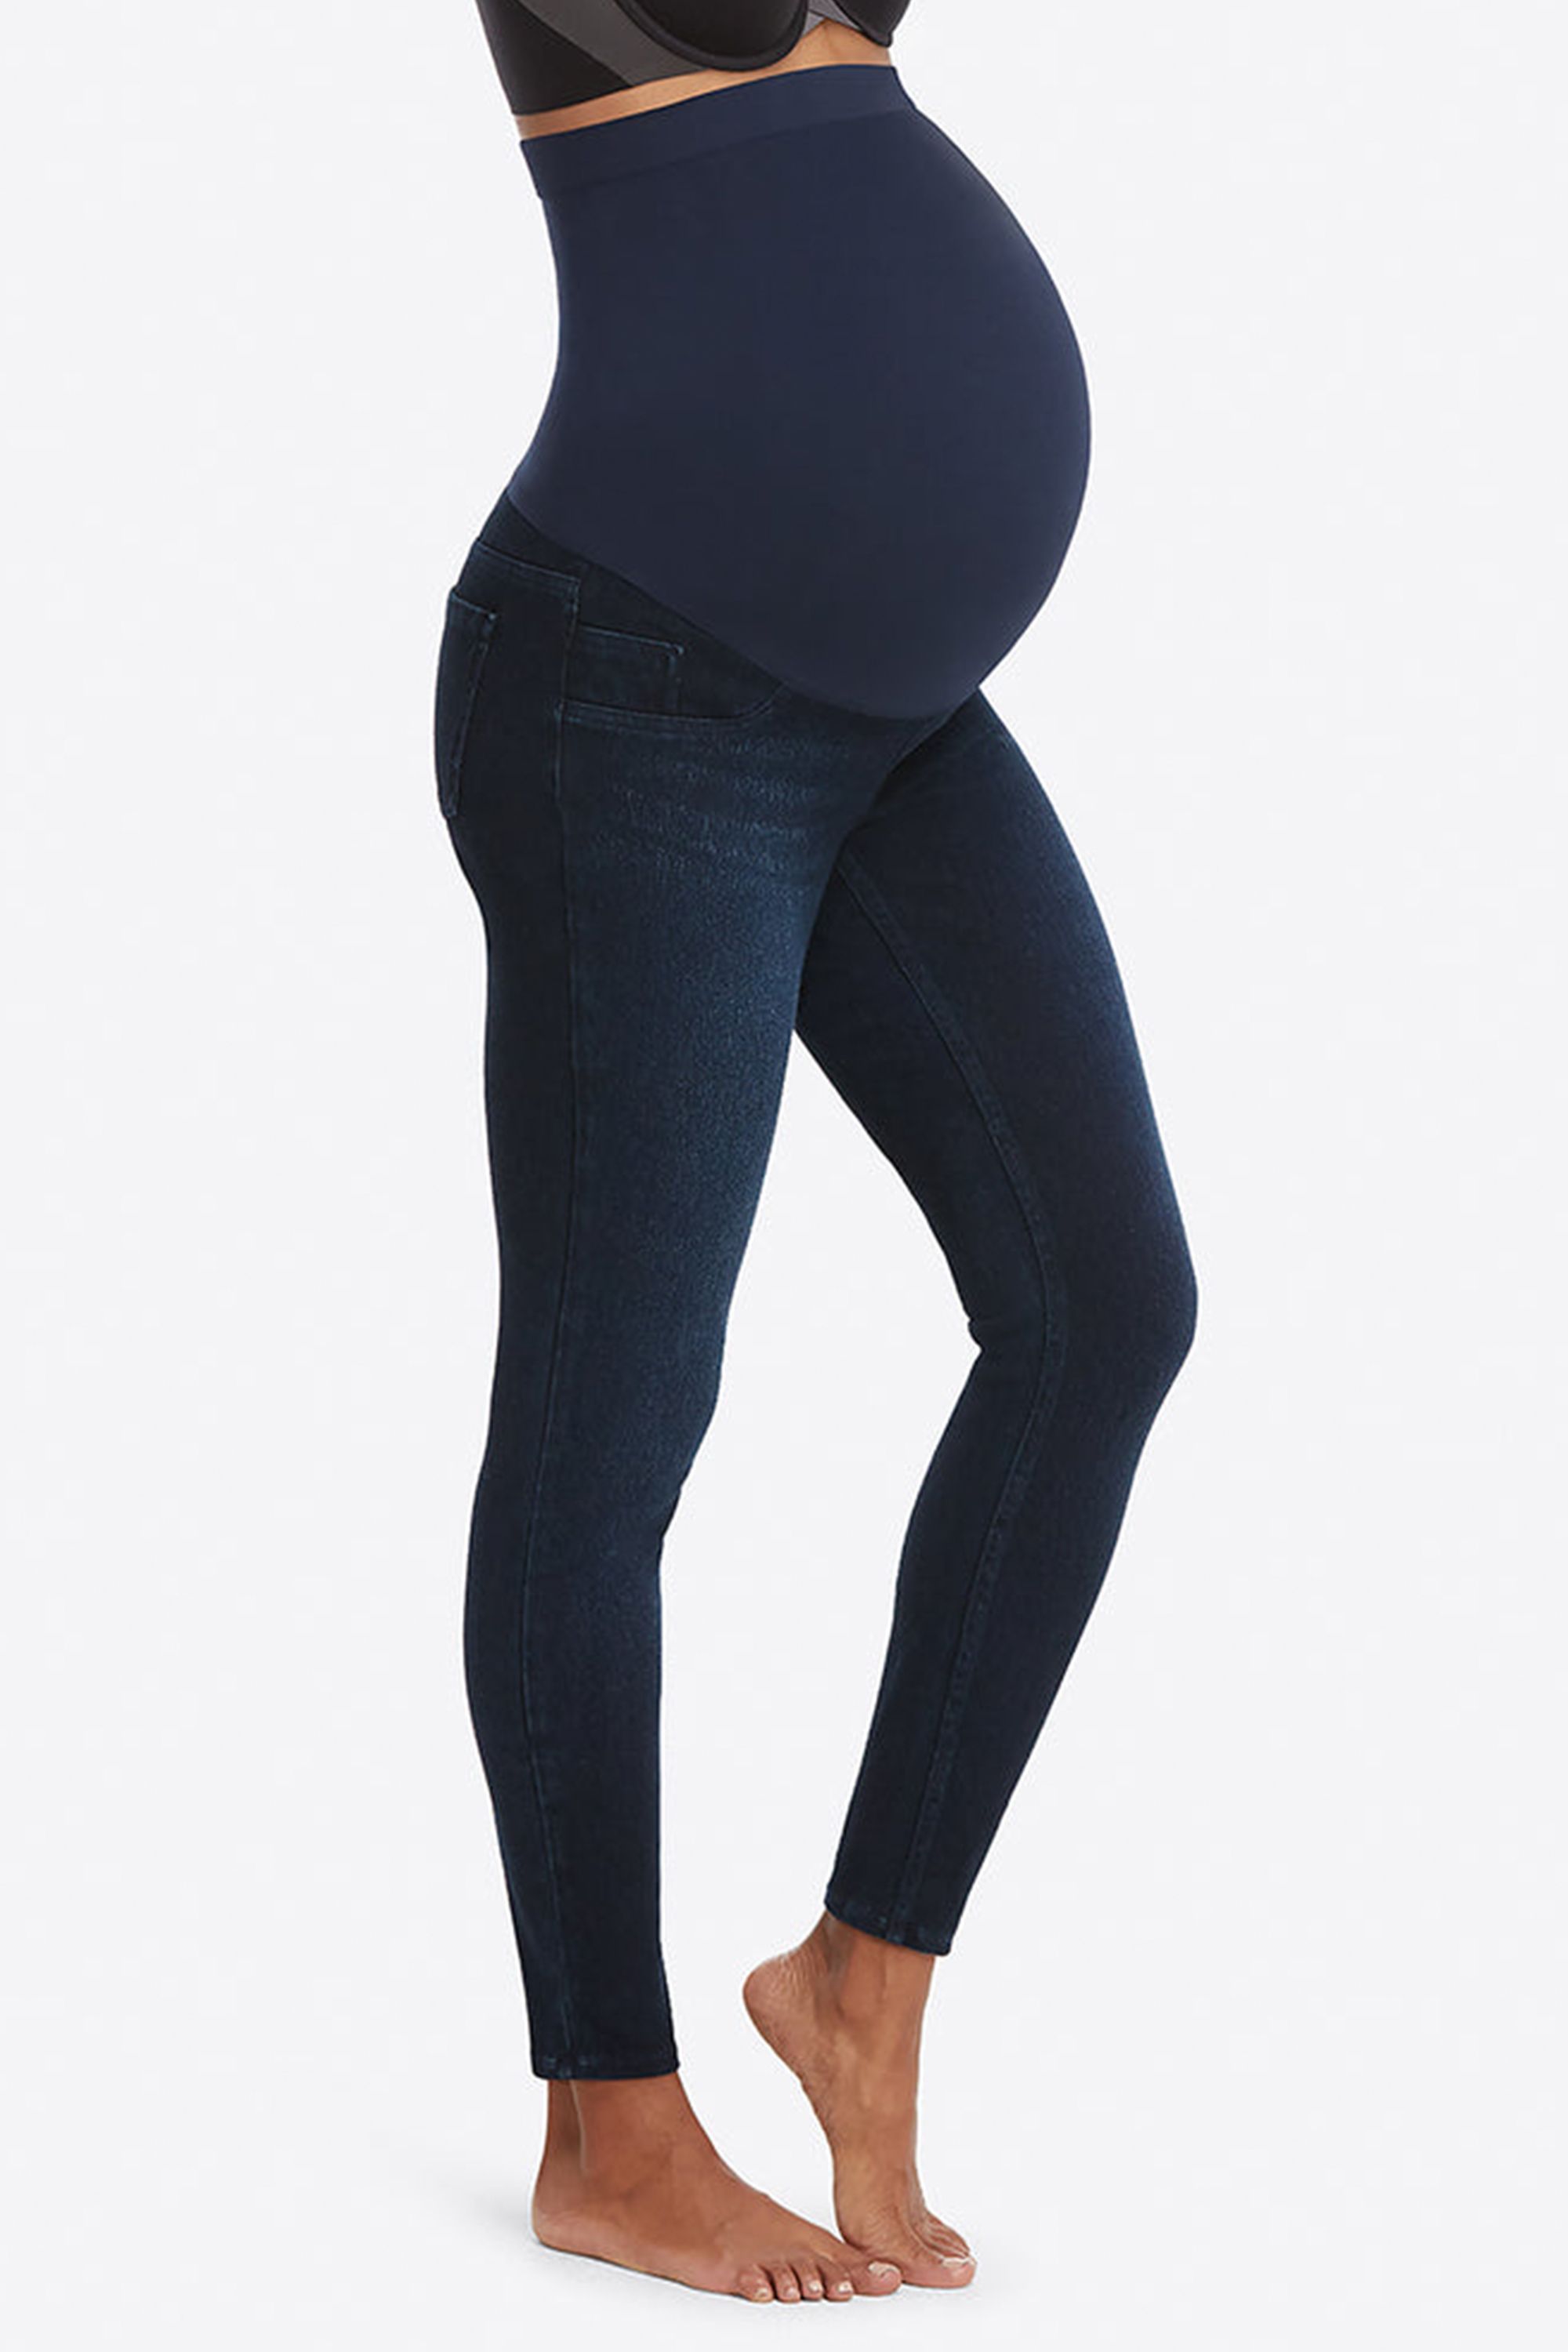 Lululemon's Align Leggings Are Hands Down The Best Maternity Pants - Forbes  Vetted